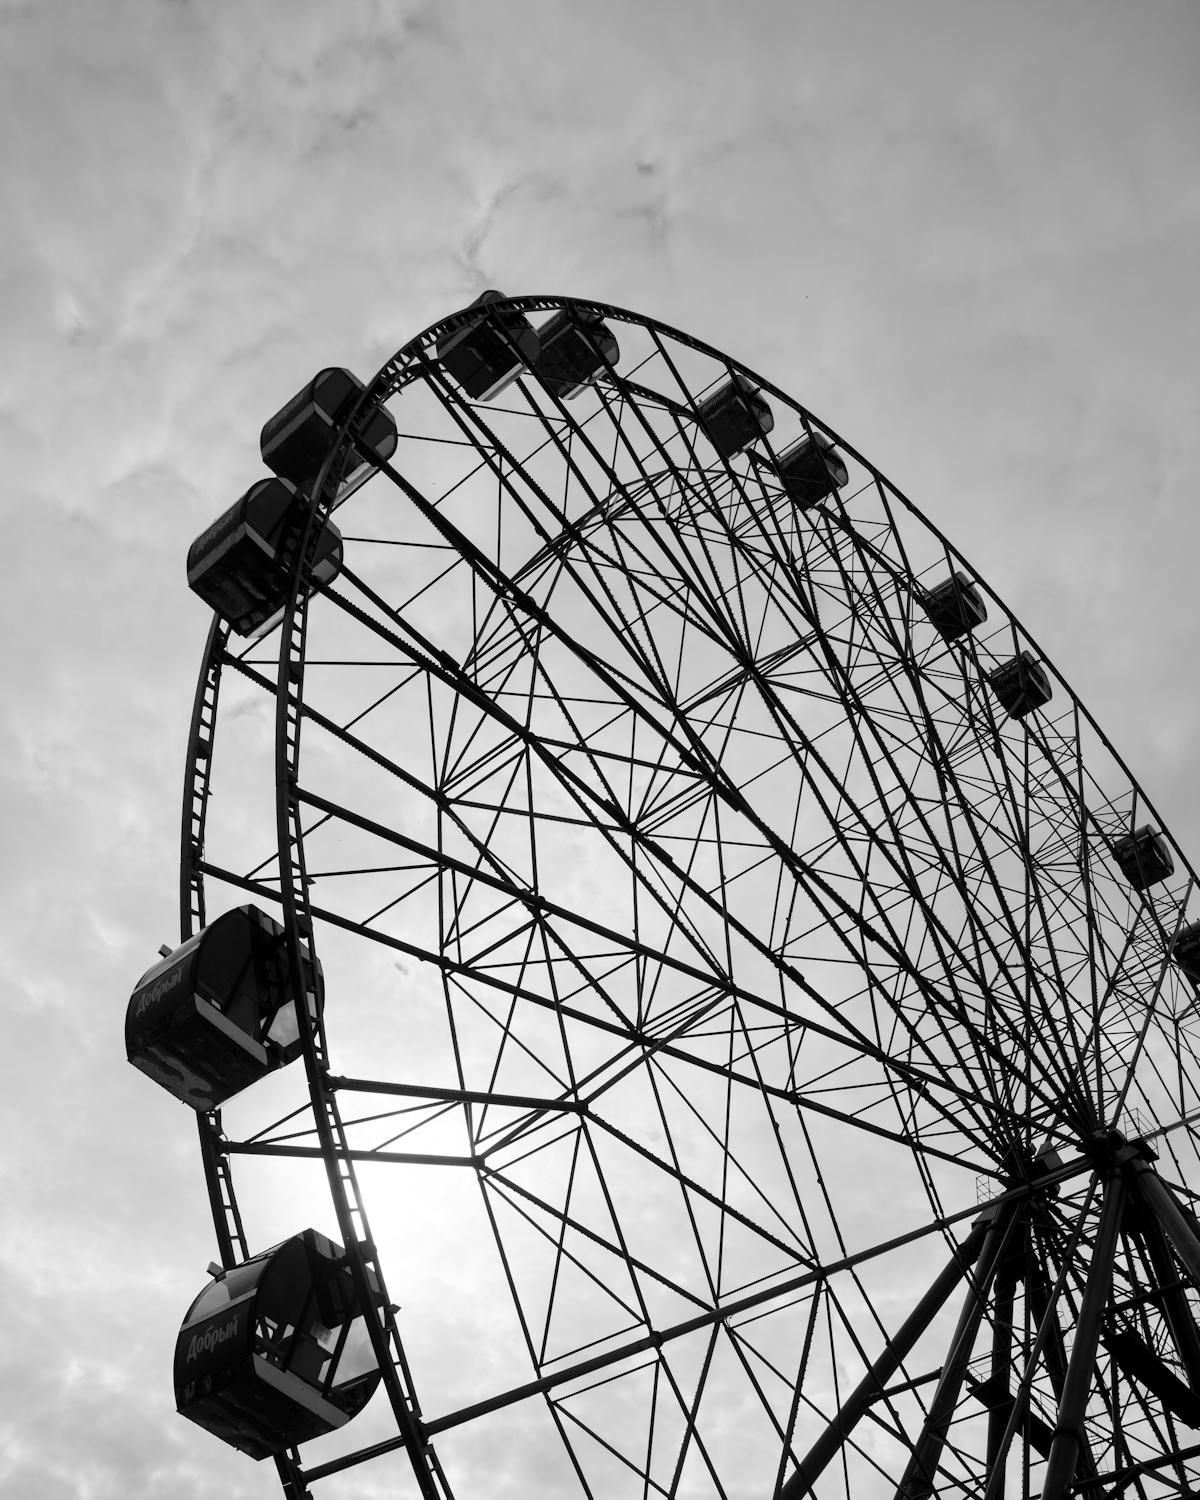 Grayscale Photo of a Ferris Wheel · Free Stock Photo